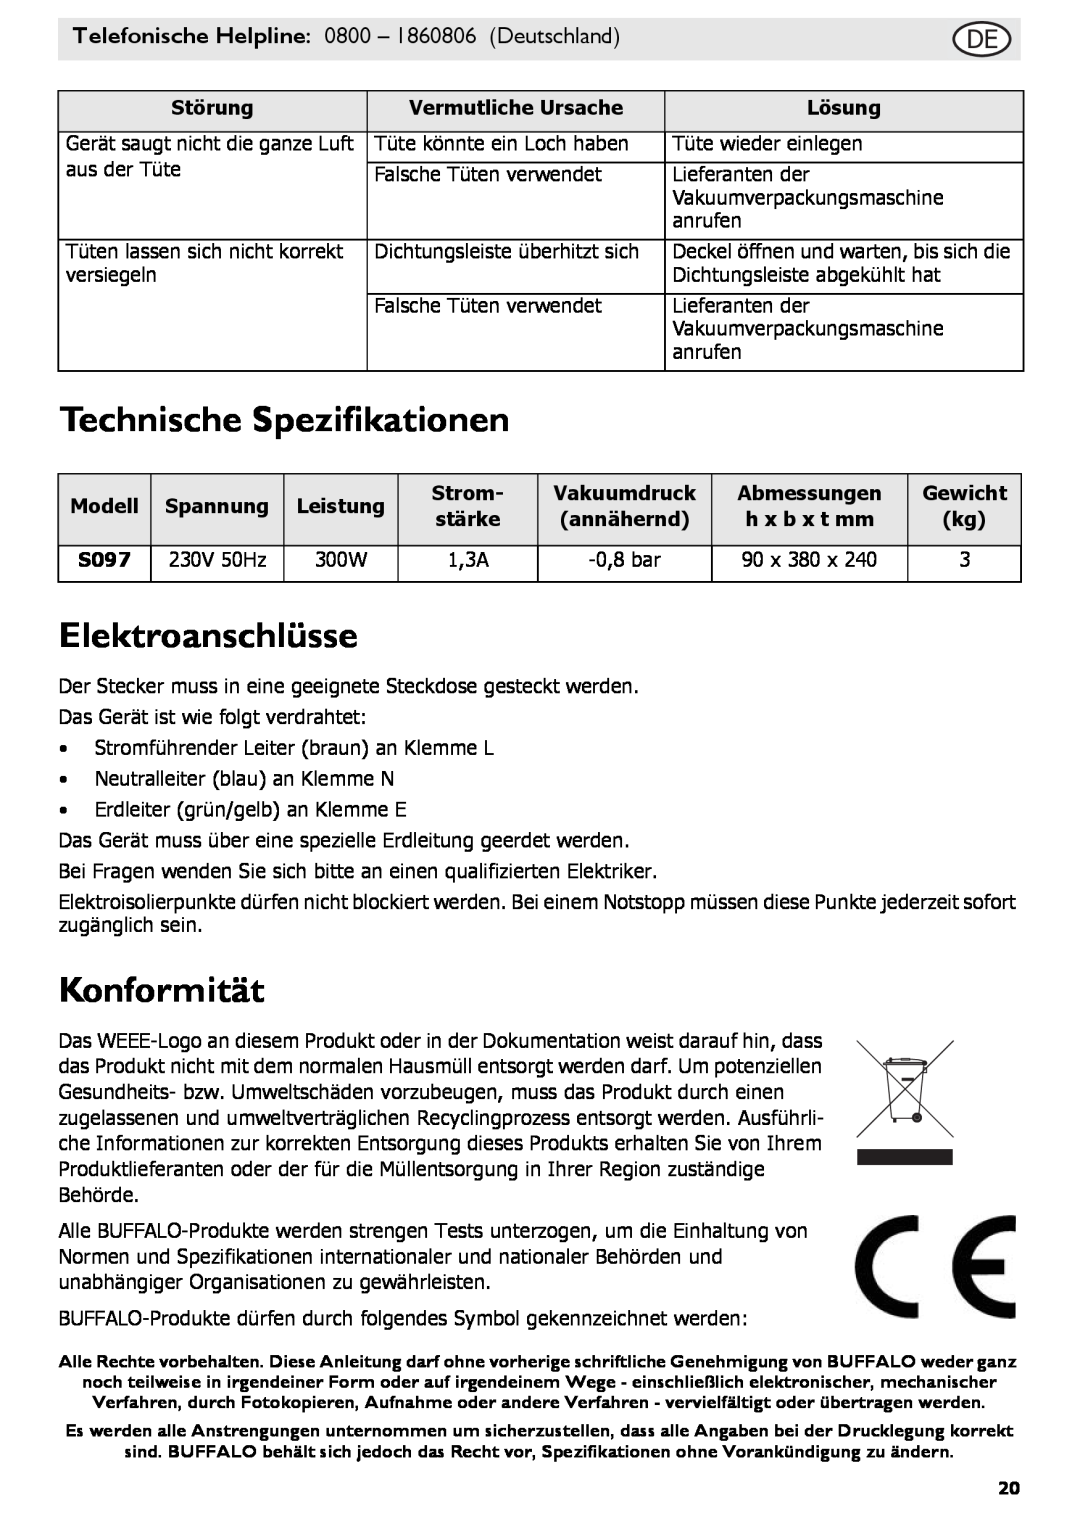 Buffalo Tools S097 instruction manual Technische Spezifikationen, Elektroanschlüsse, Konformität 